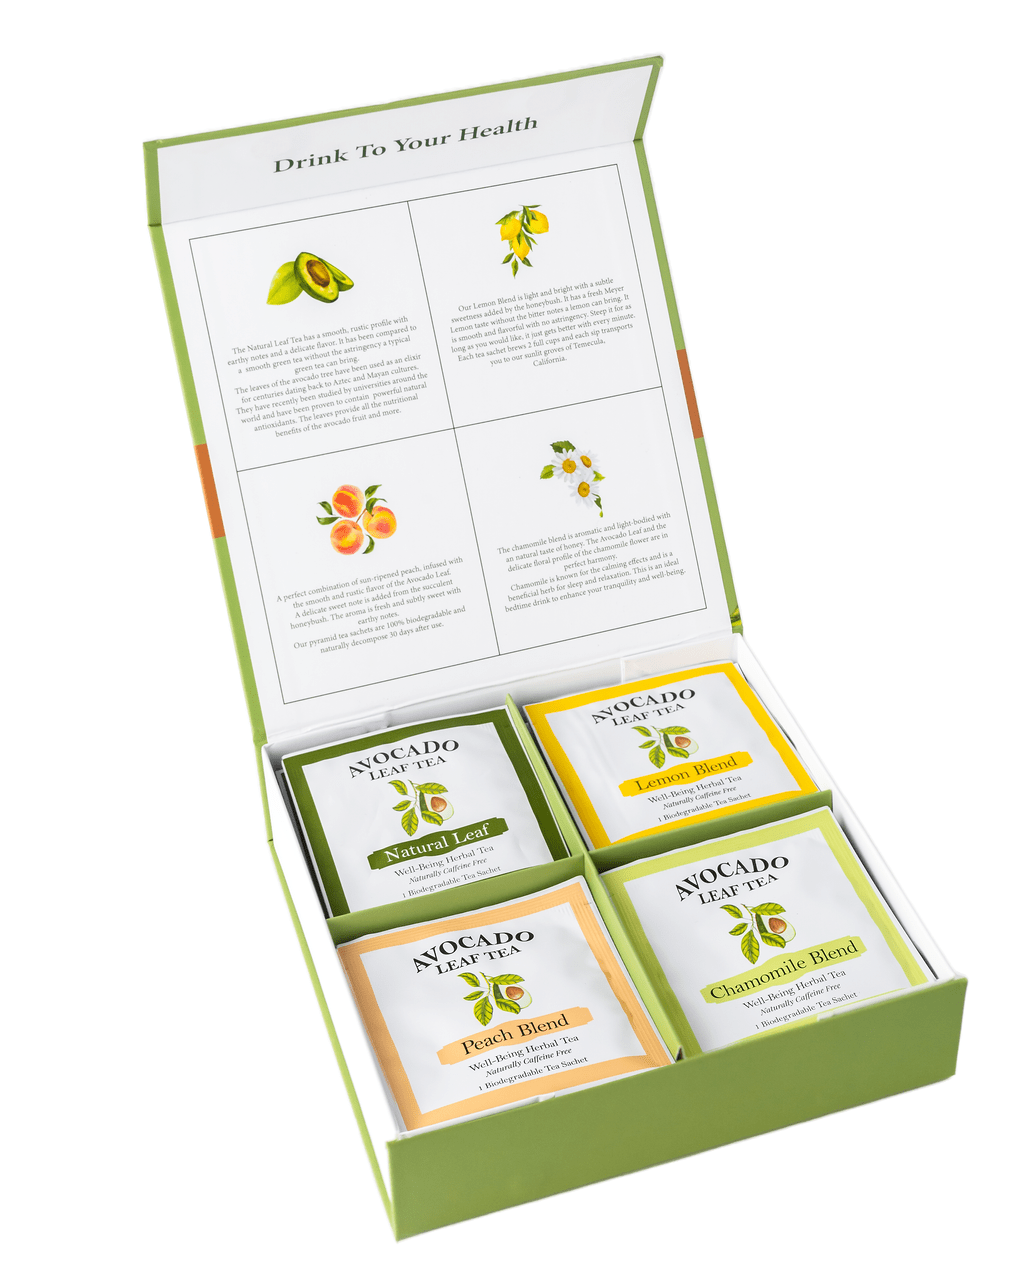 Wellness Gift Box Set - 32 Ct. - Limit 1 per order